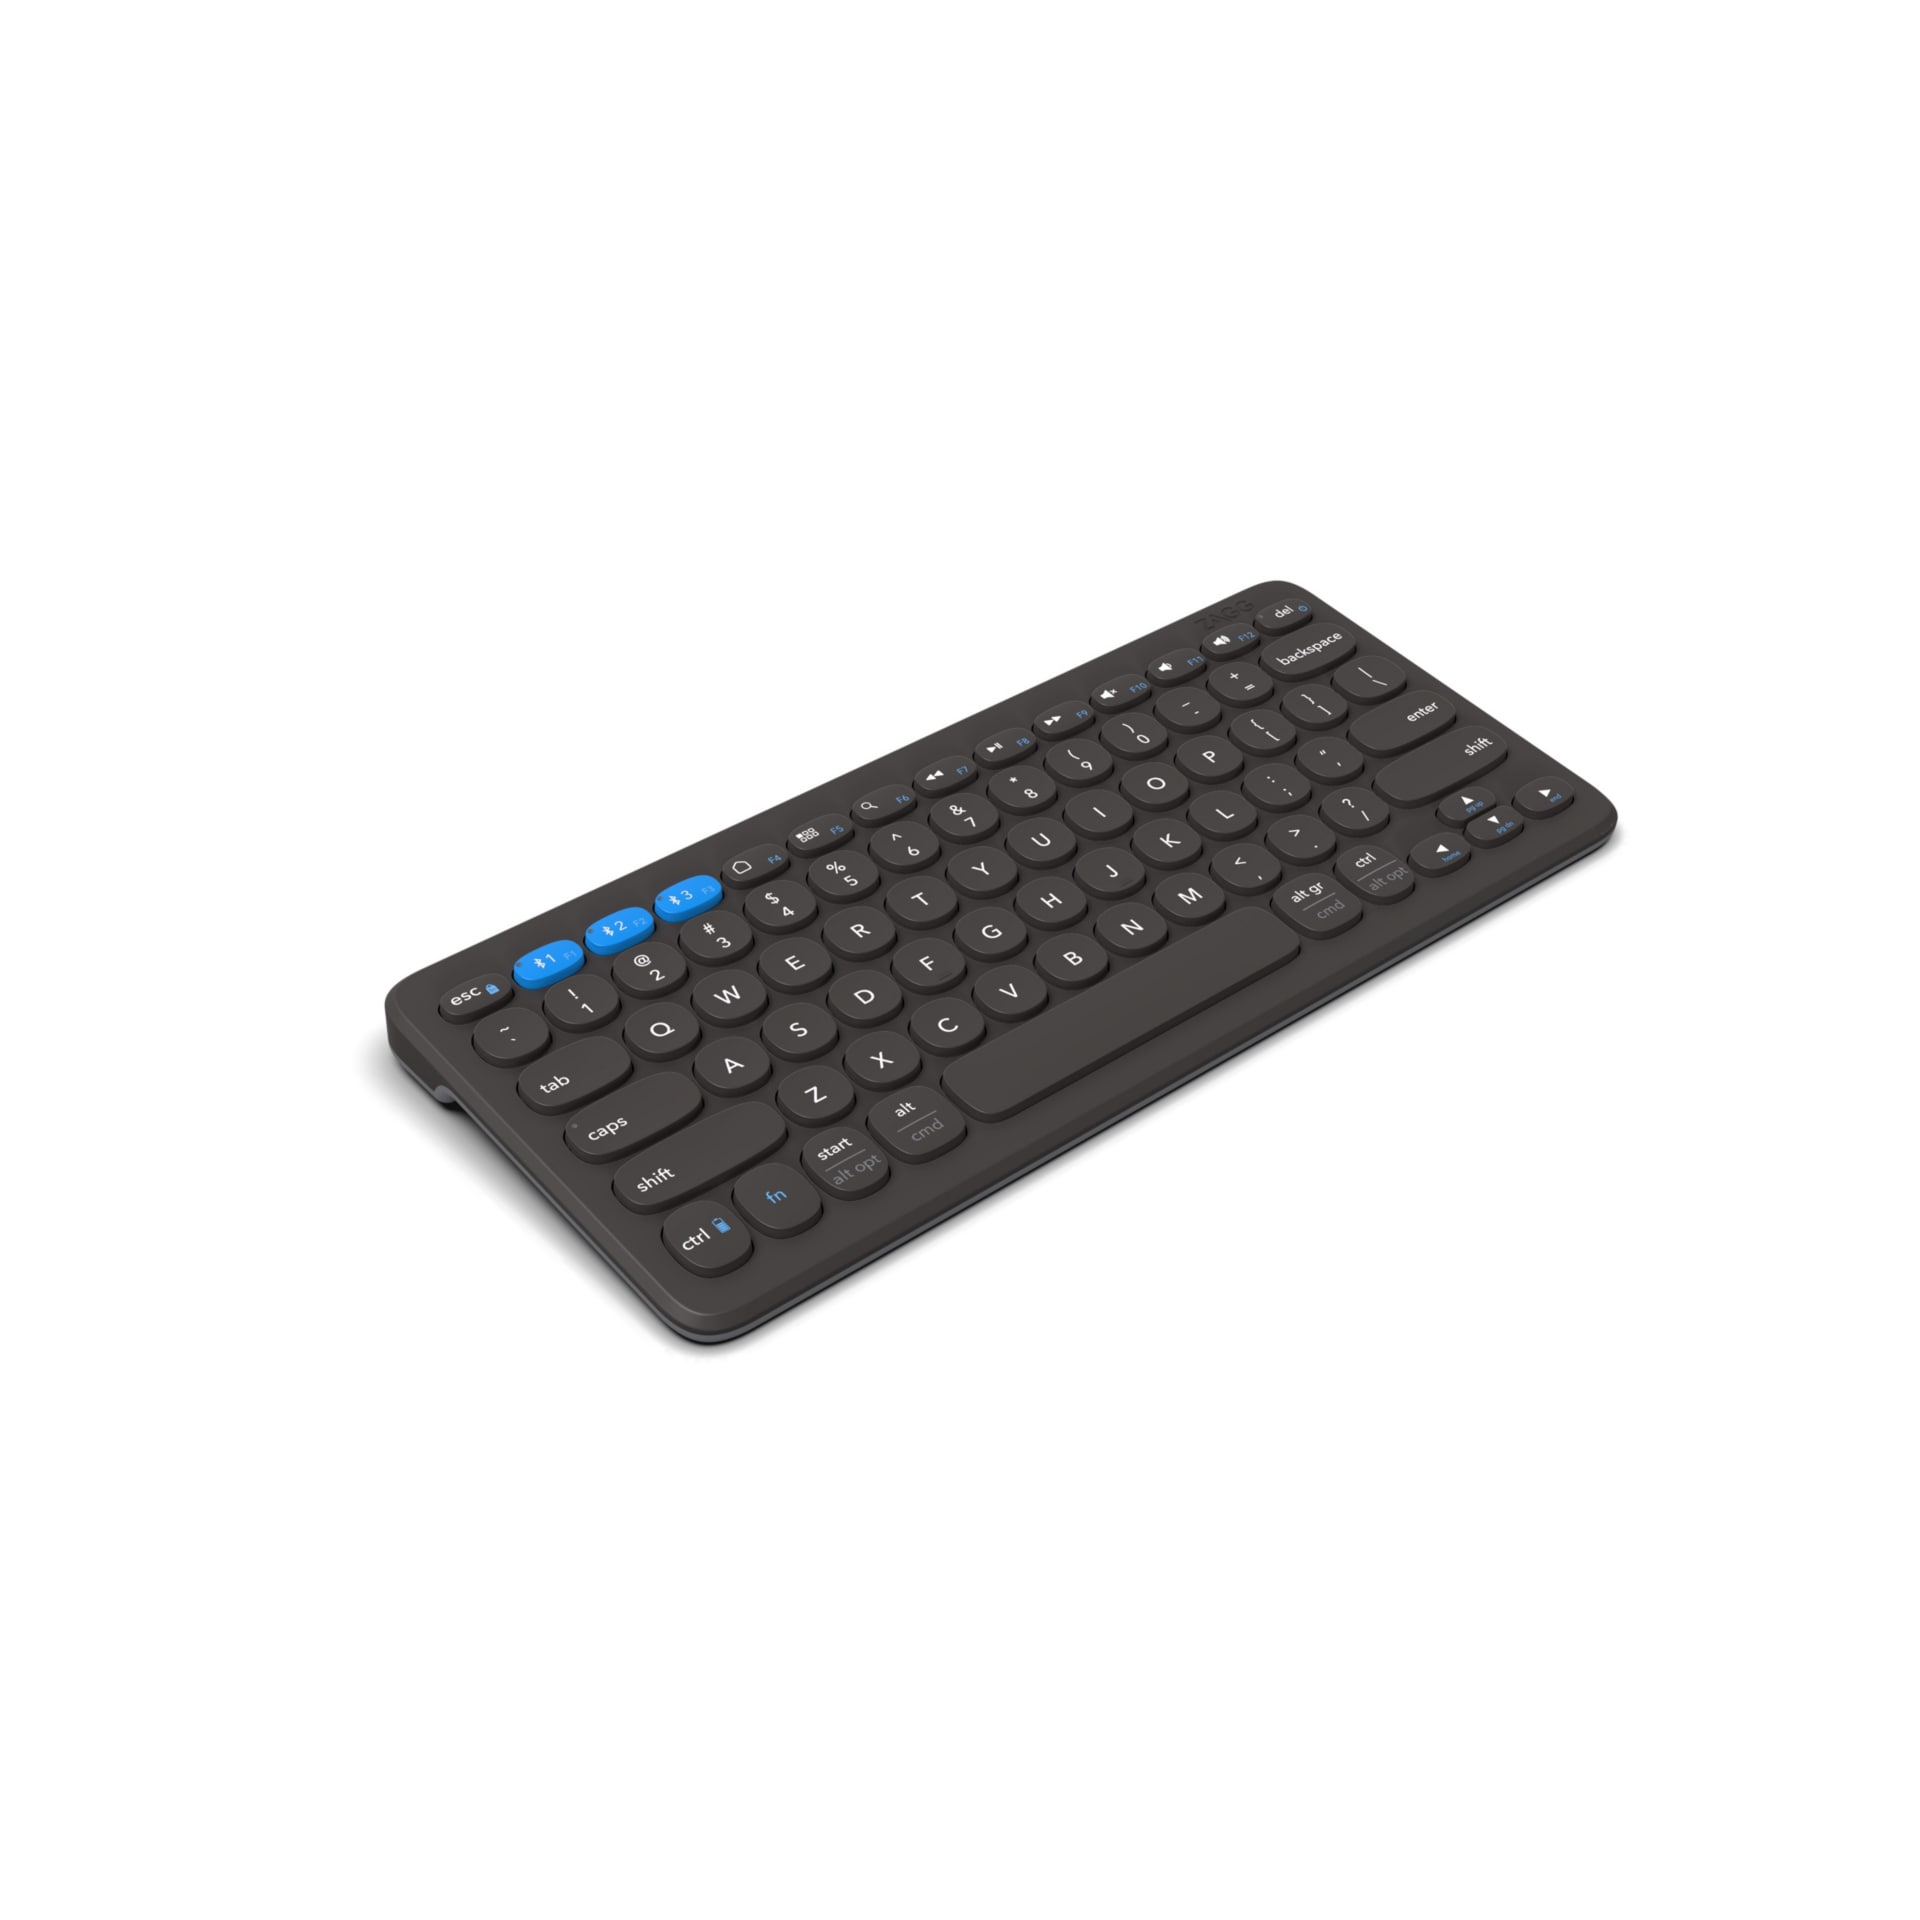 ZAGG Pro Keyboard 12 Multi-pairing 12-inch Keyboard with Wireless Charging